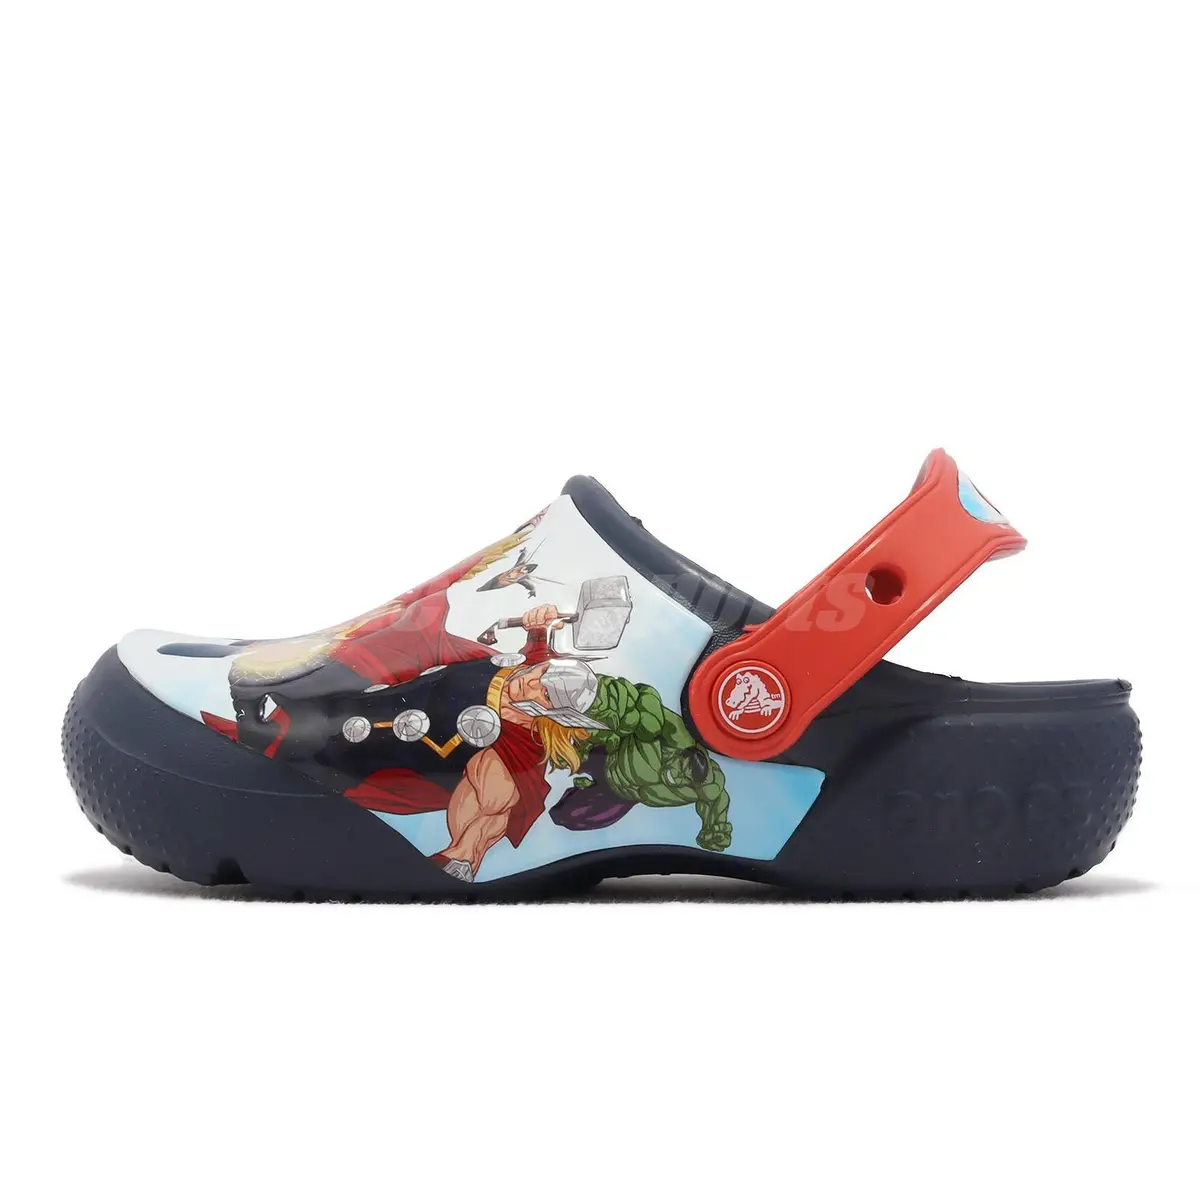 Crocs | Kids Preschool Clog eBay K Patch Lab Shoes Navy Fun Sandals Avengers 207069-410